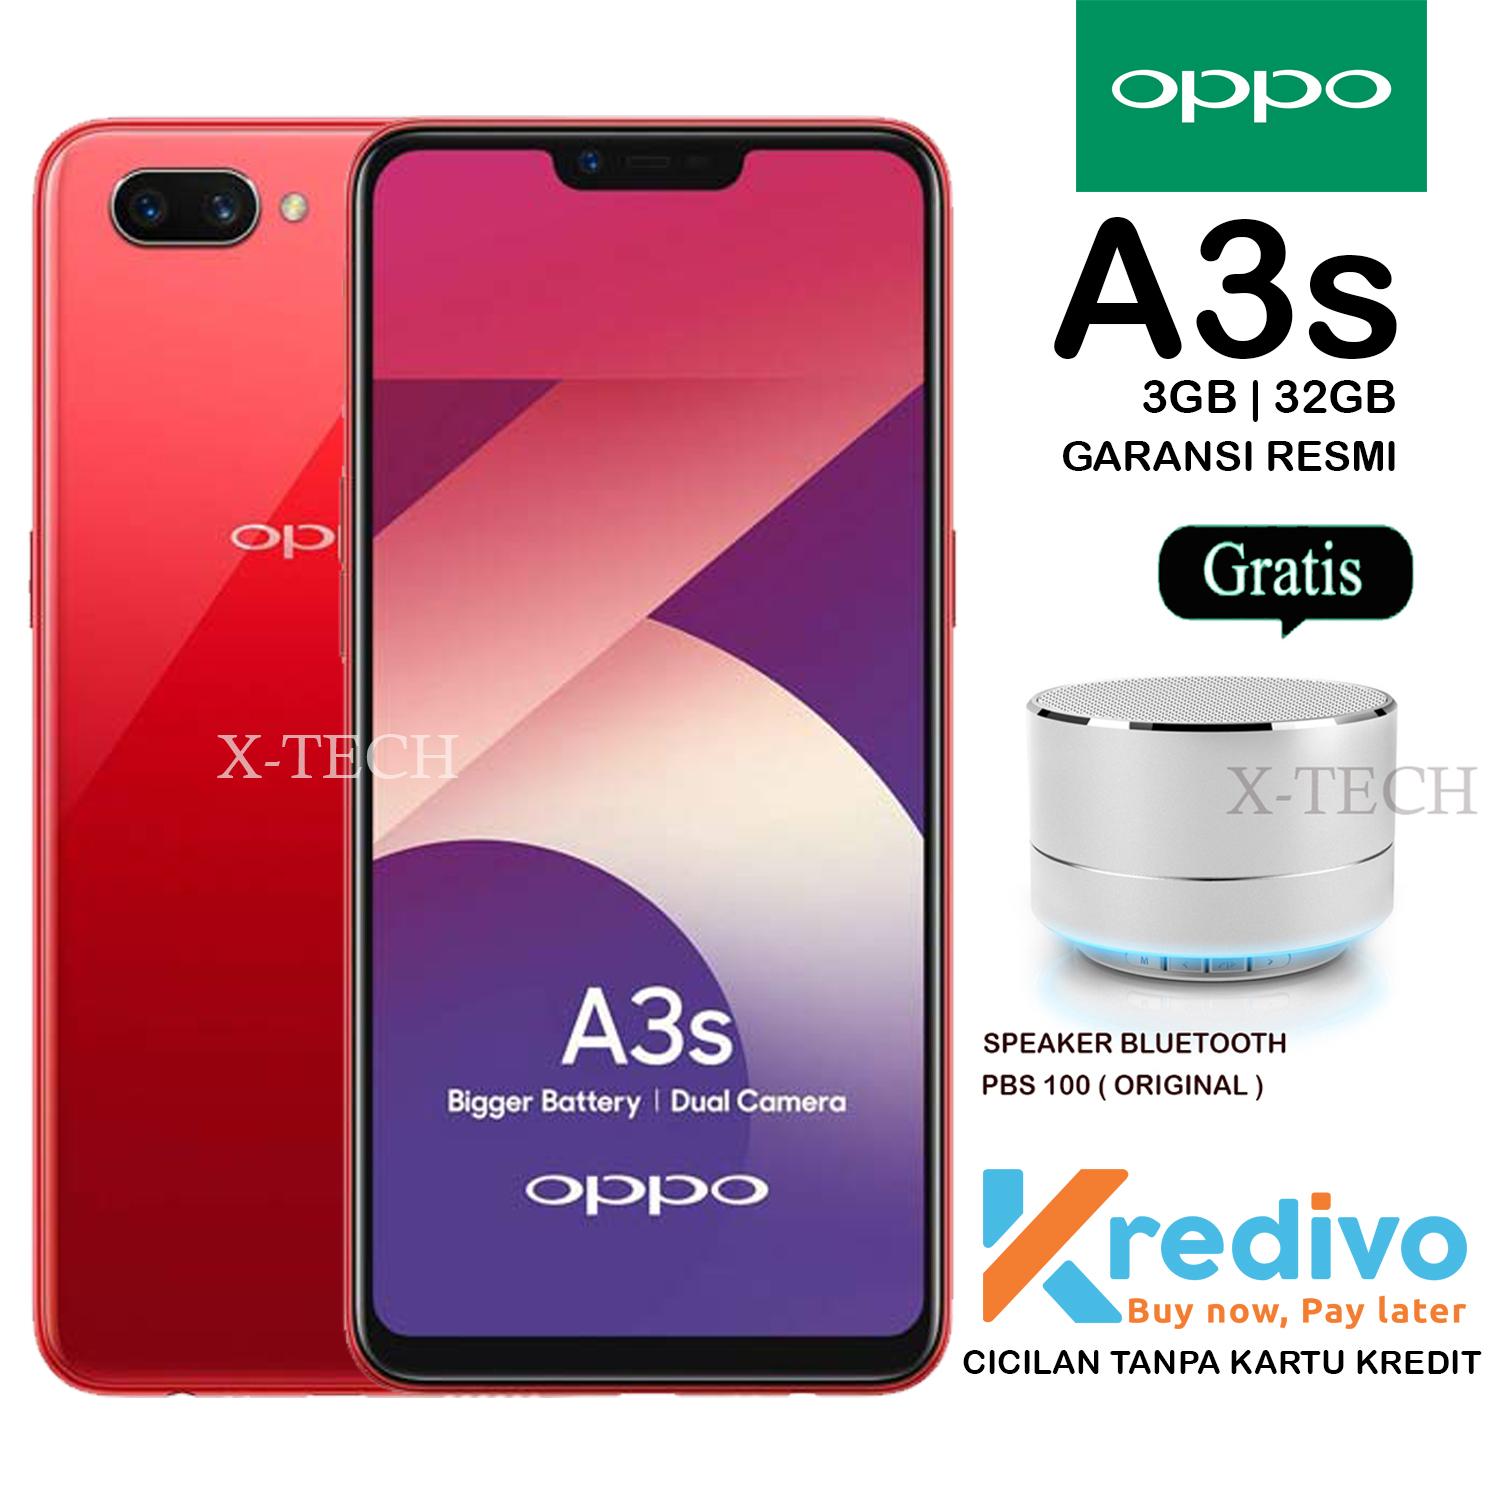 OPPO A3S - 3GB/32GB - 4G LTE - GARANSI RESMI - RED